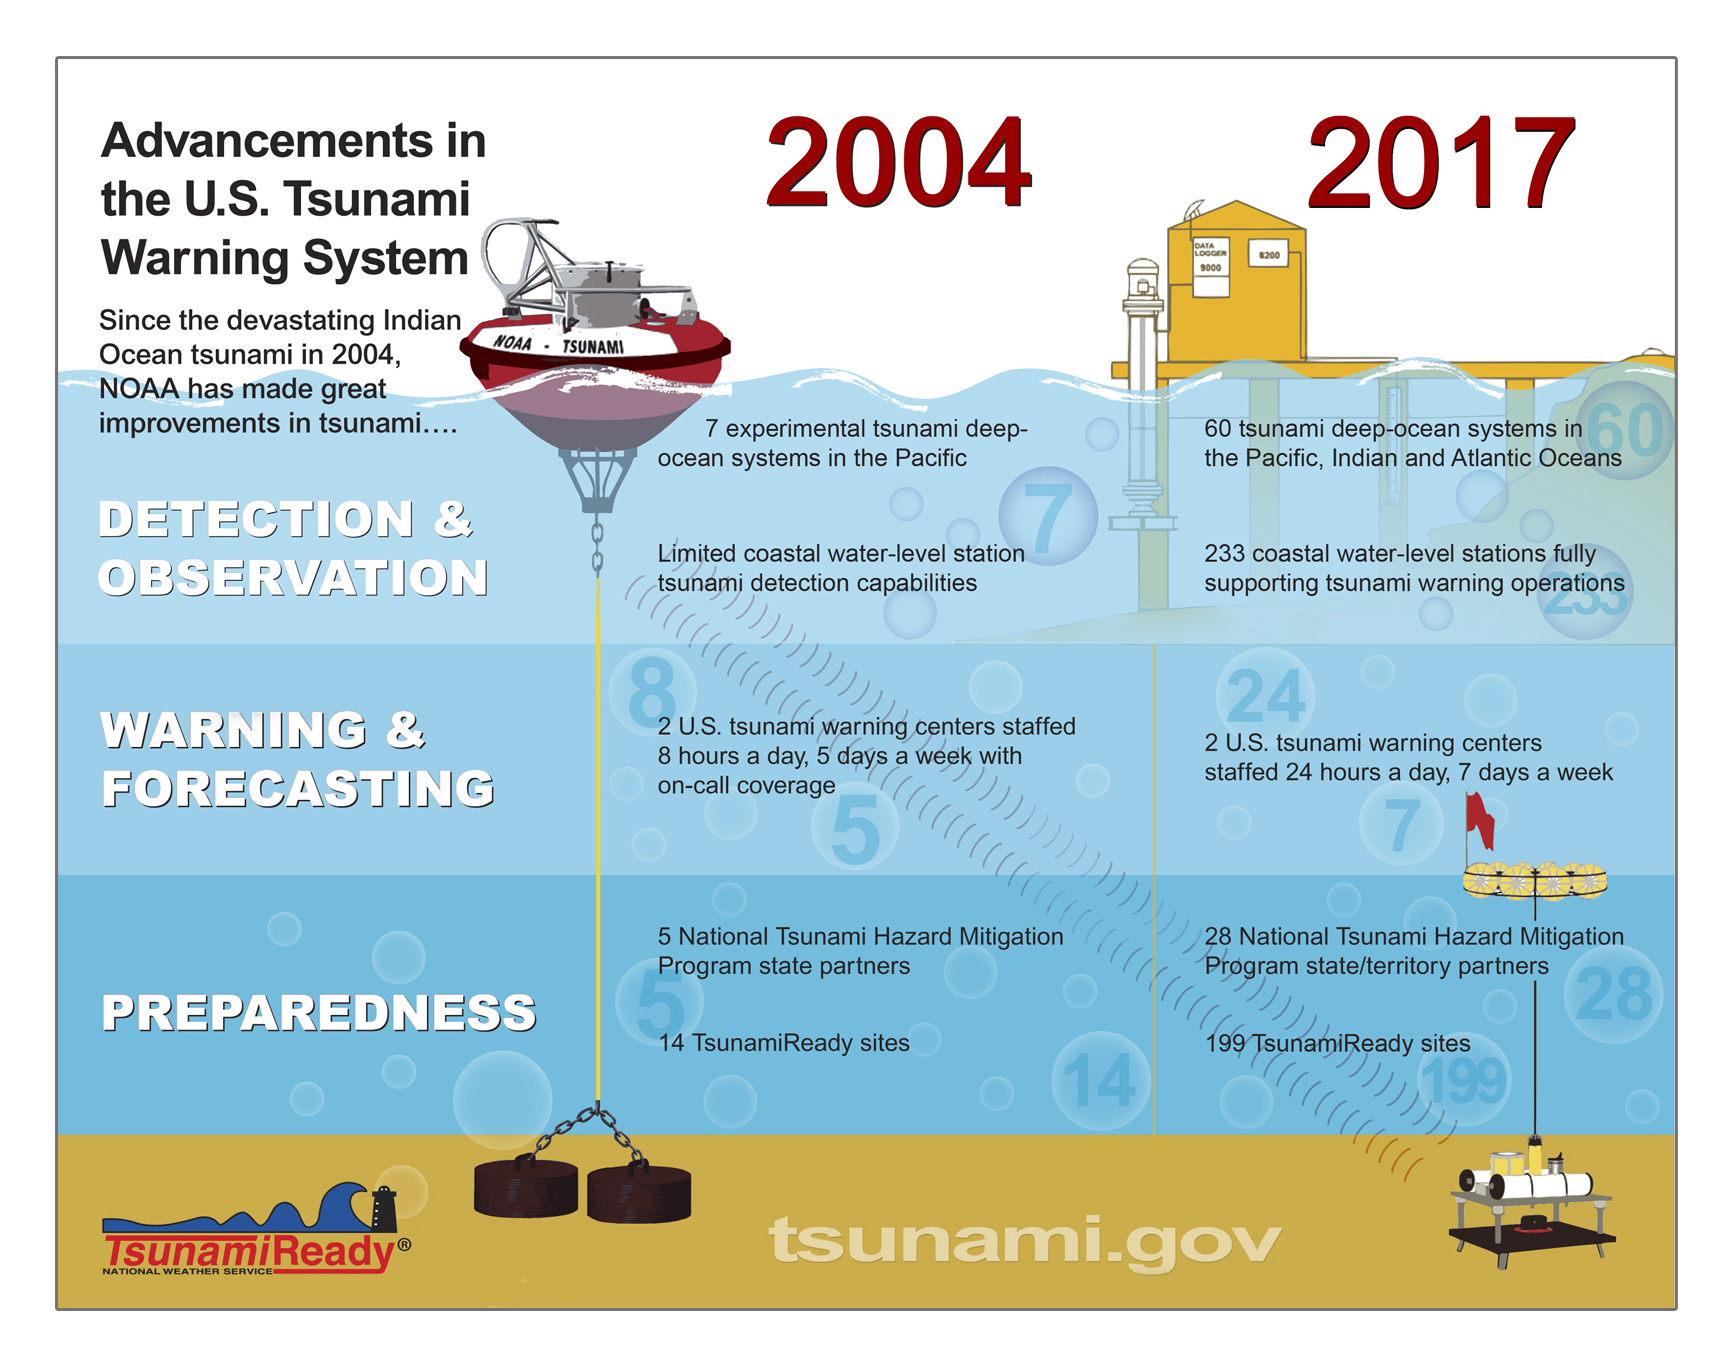 Advancements in the U.S. Tsunami Warning System: 2004 vs. 2017.